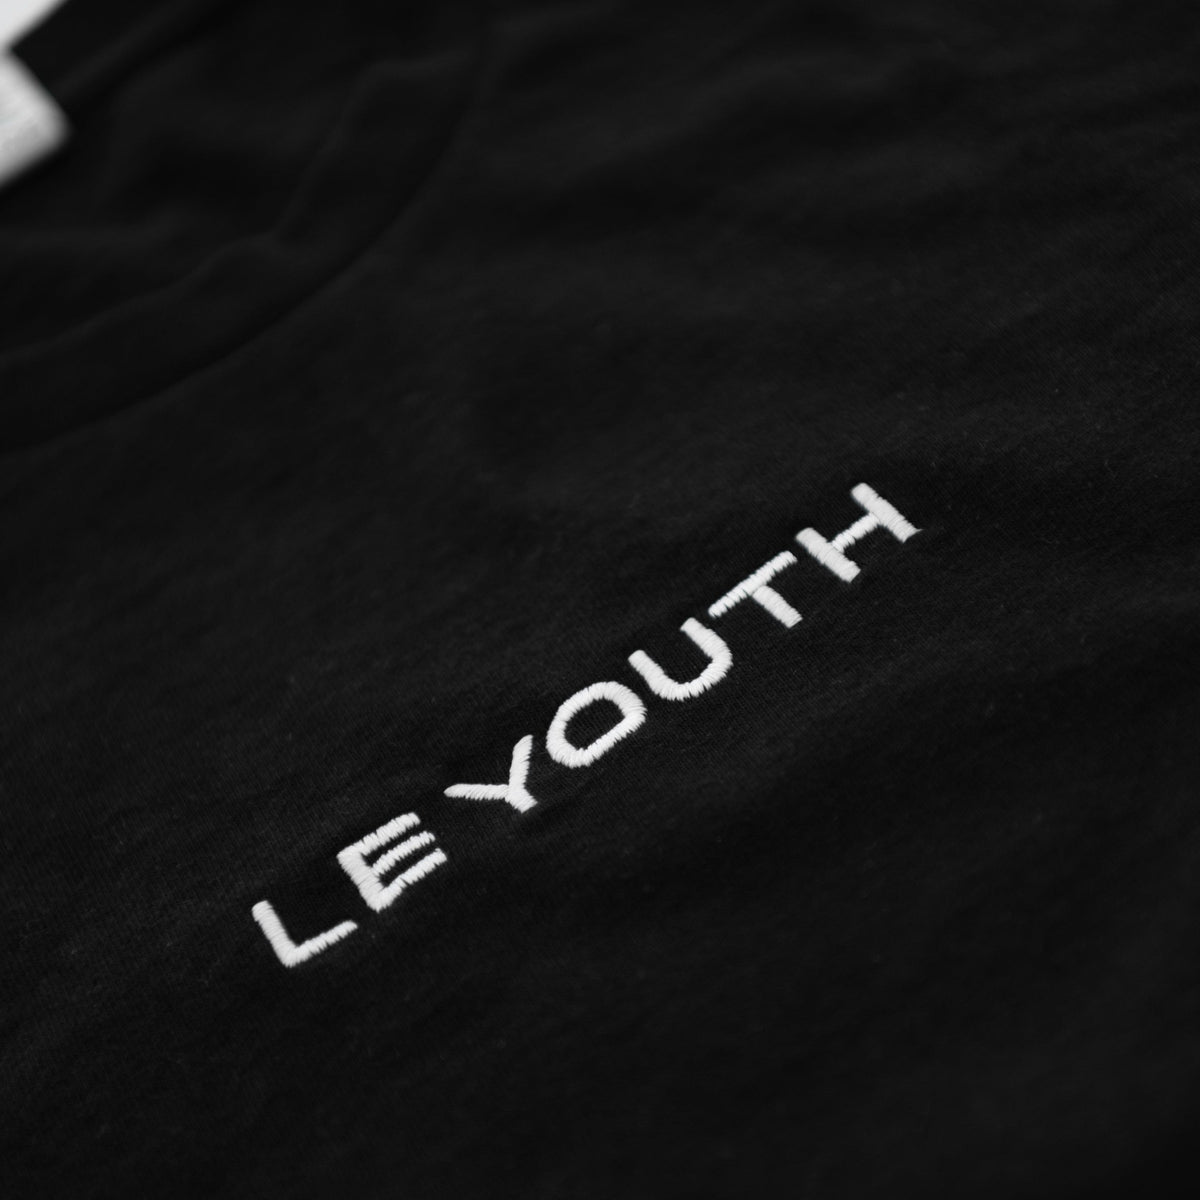 Le Youth Logo Tee